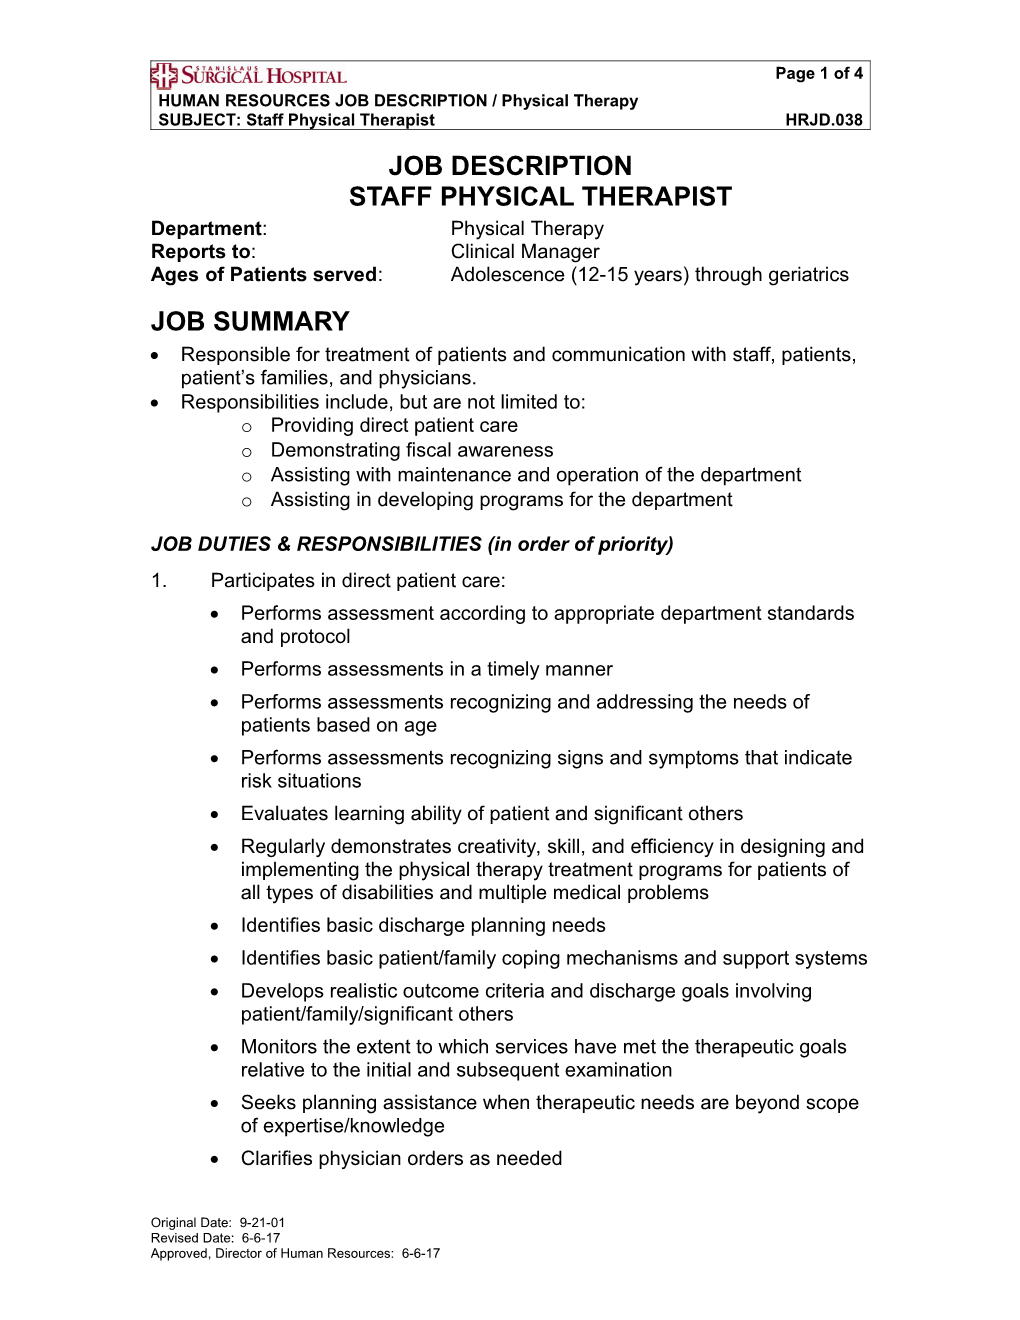 HRJD.038 Staff Physical Therapist